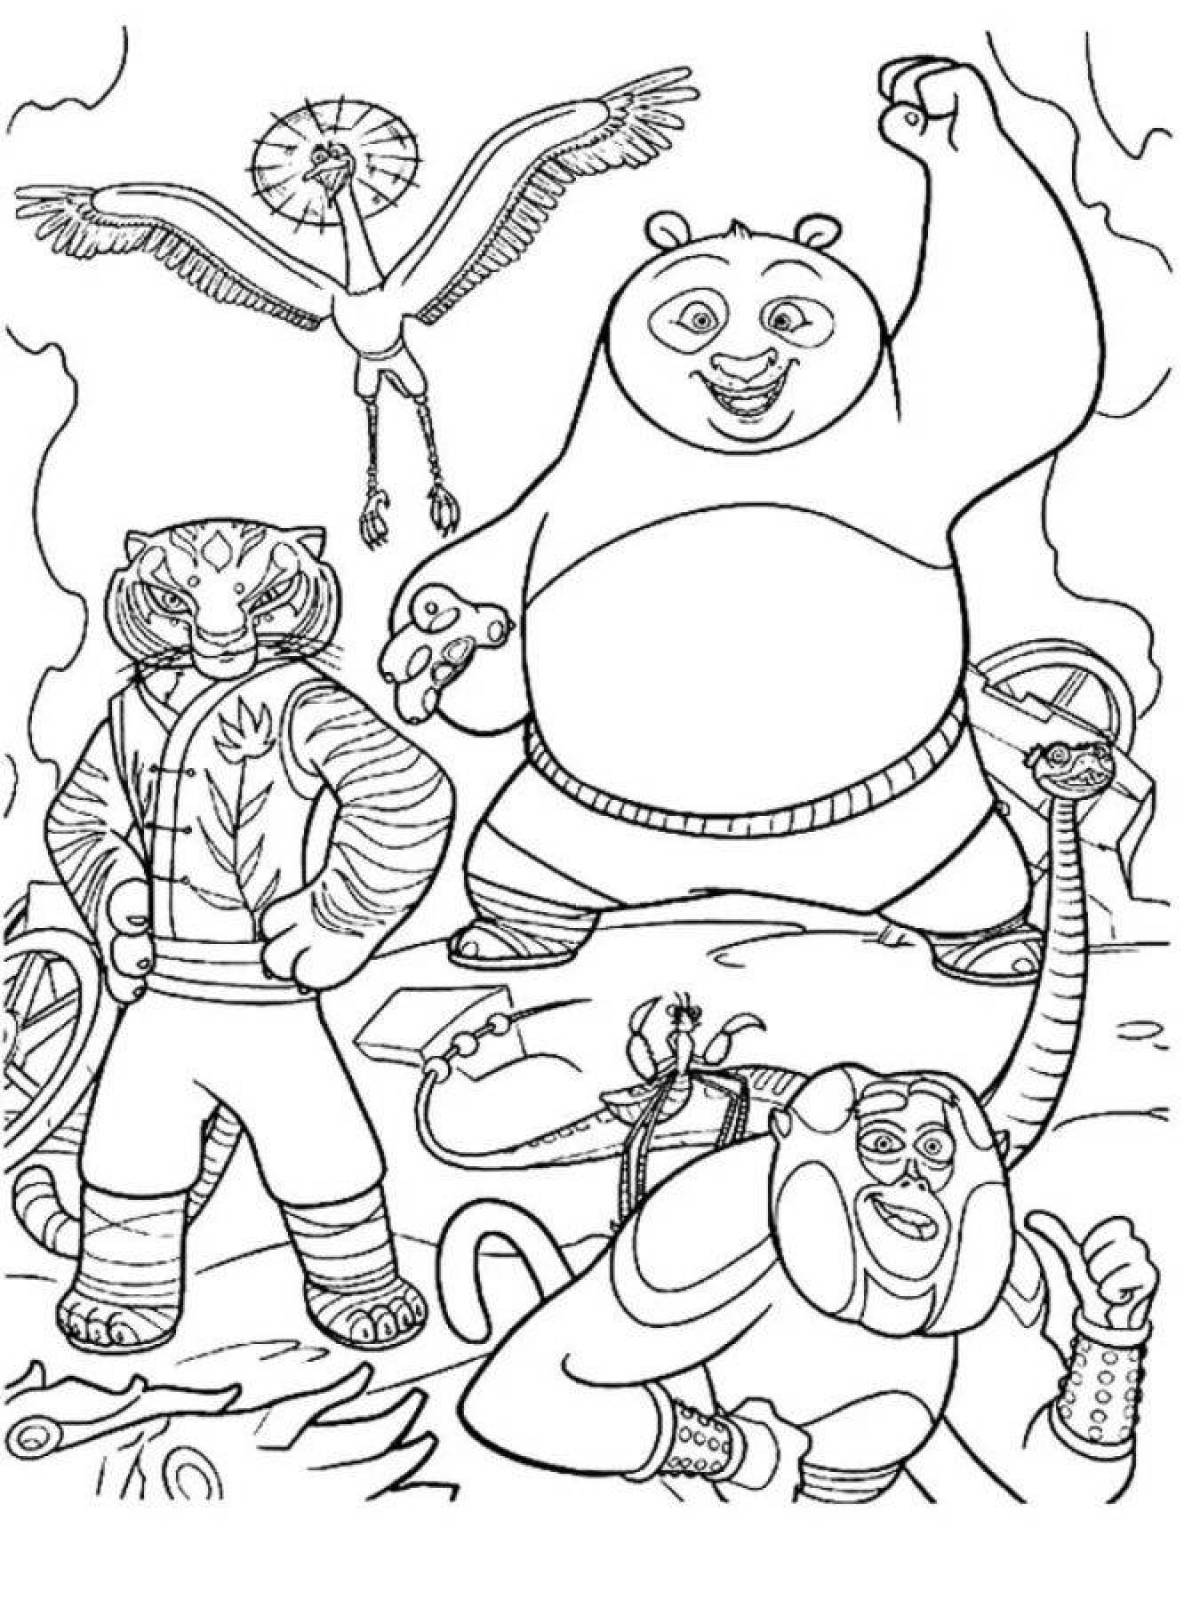 Раскраска кунг фу панда. Раскраска кунг фу Панда 3. Кунг фу Панда раскраска для детей. Герои кунг фу Панда раскраска. Раскраска кунфу Панда 3.